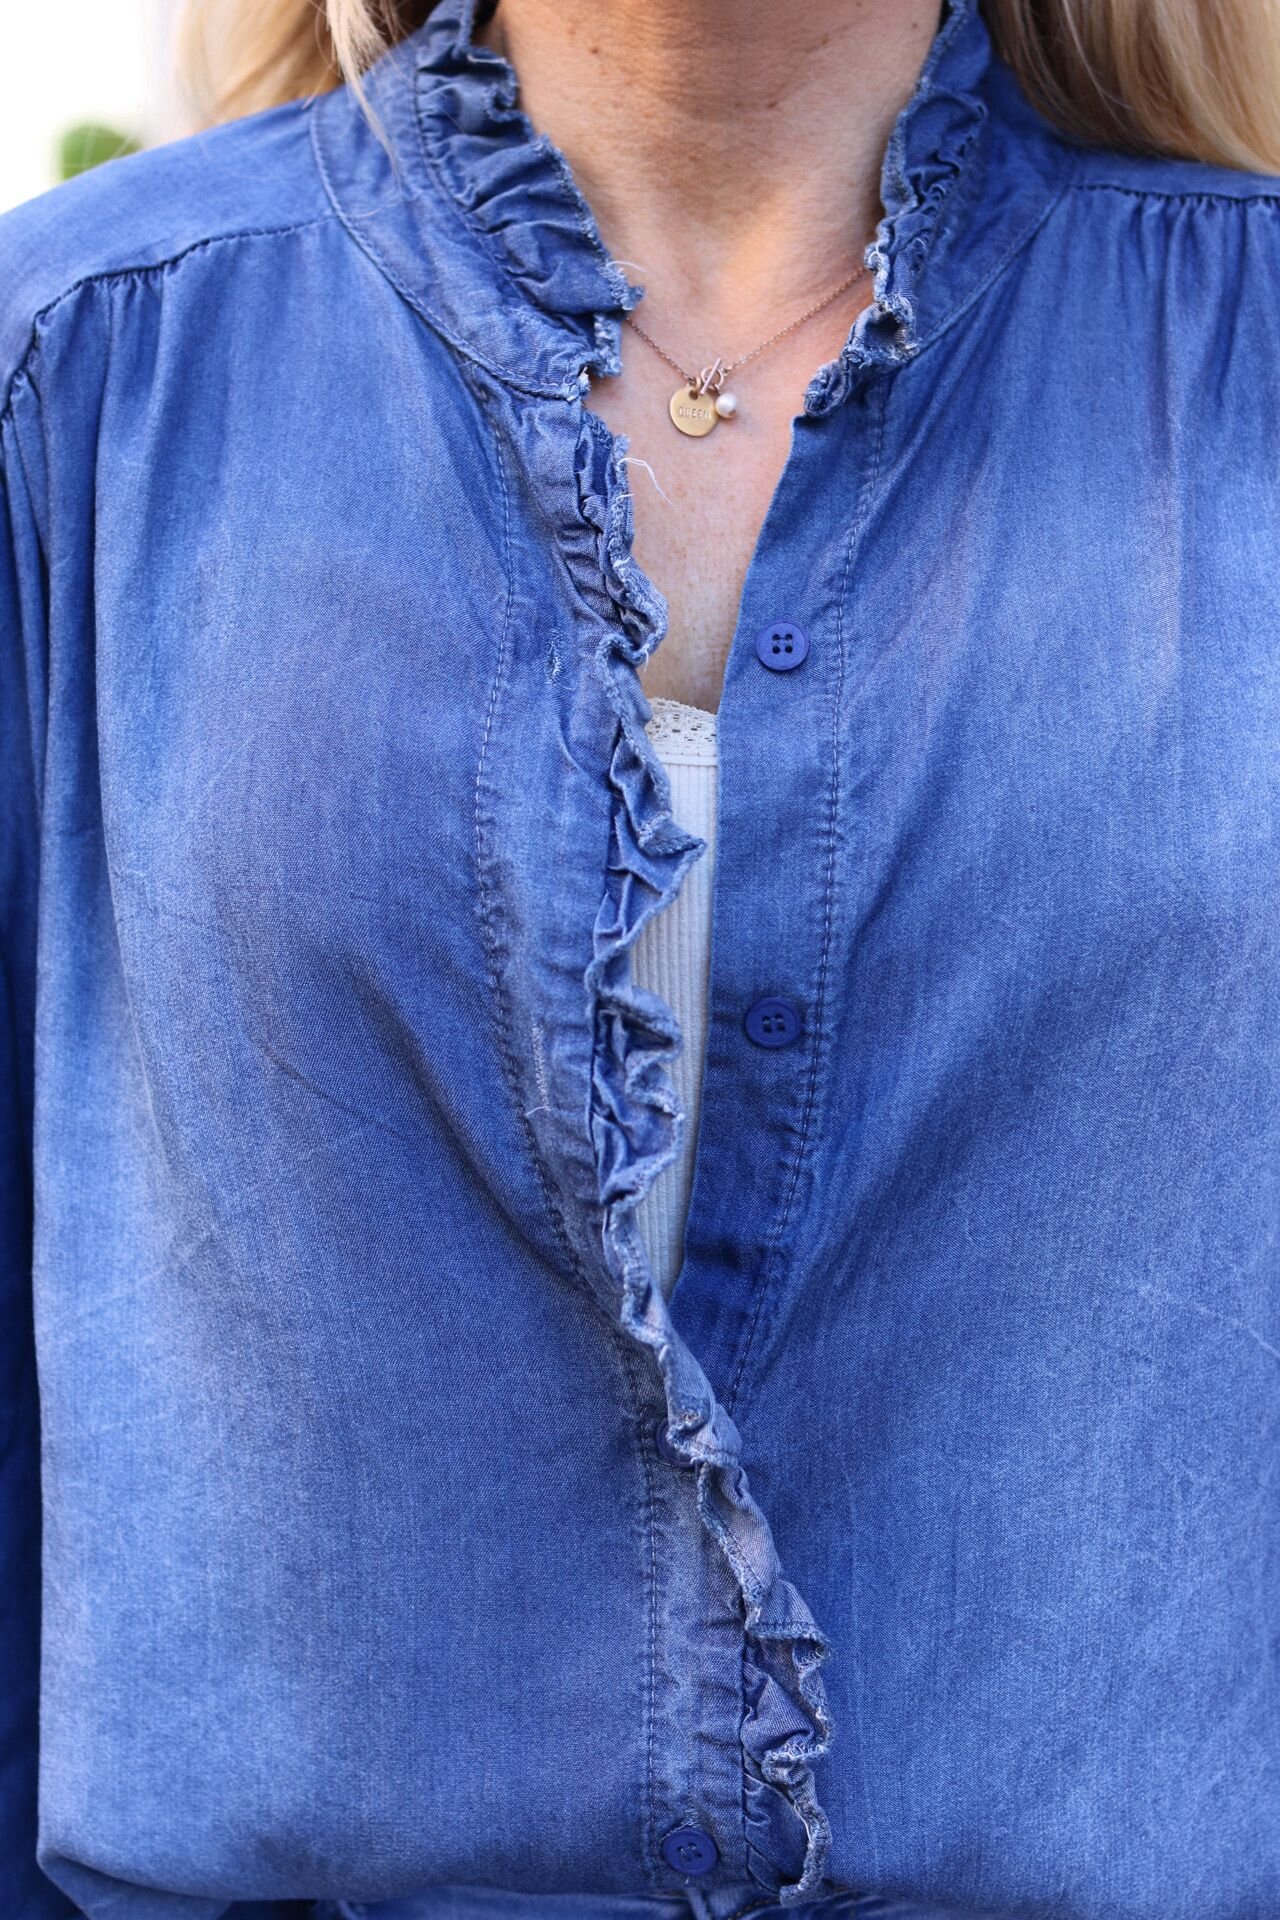 Olivia Jeans blouse - Ruffle edge